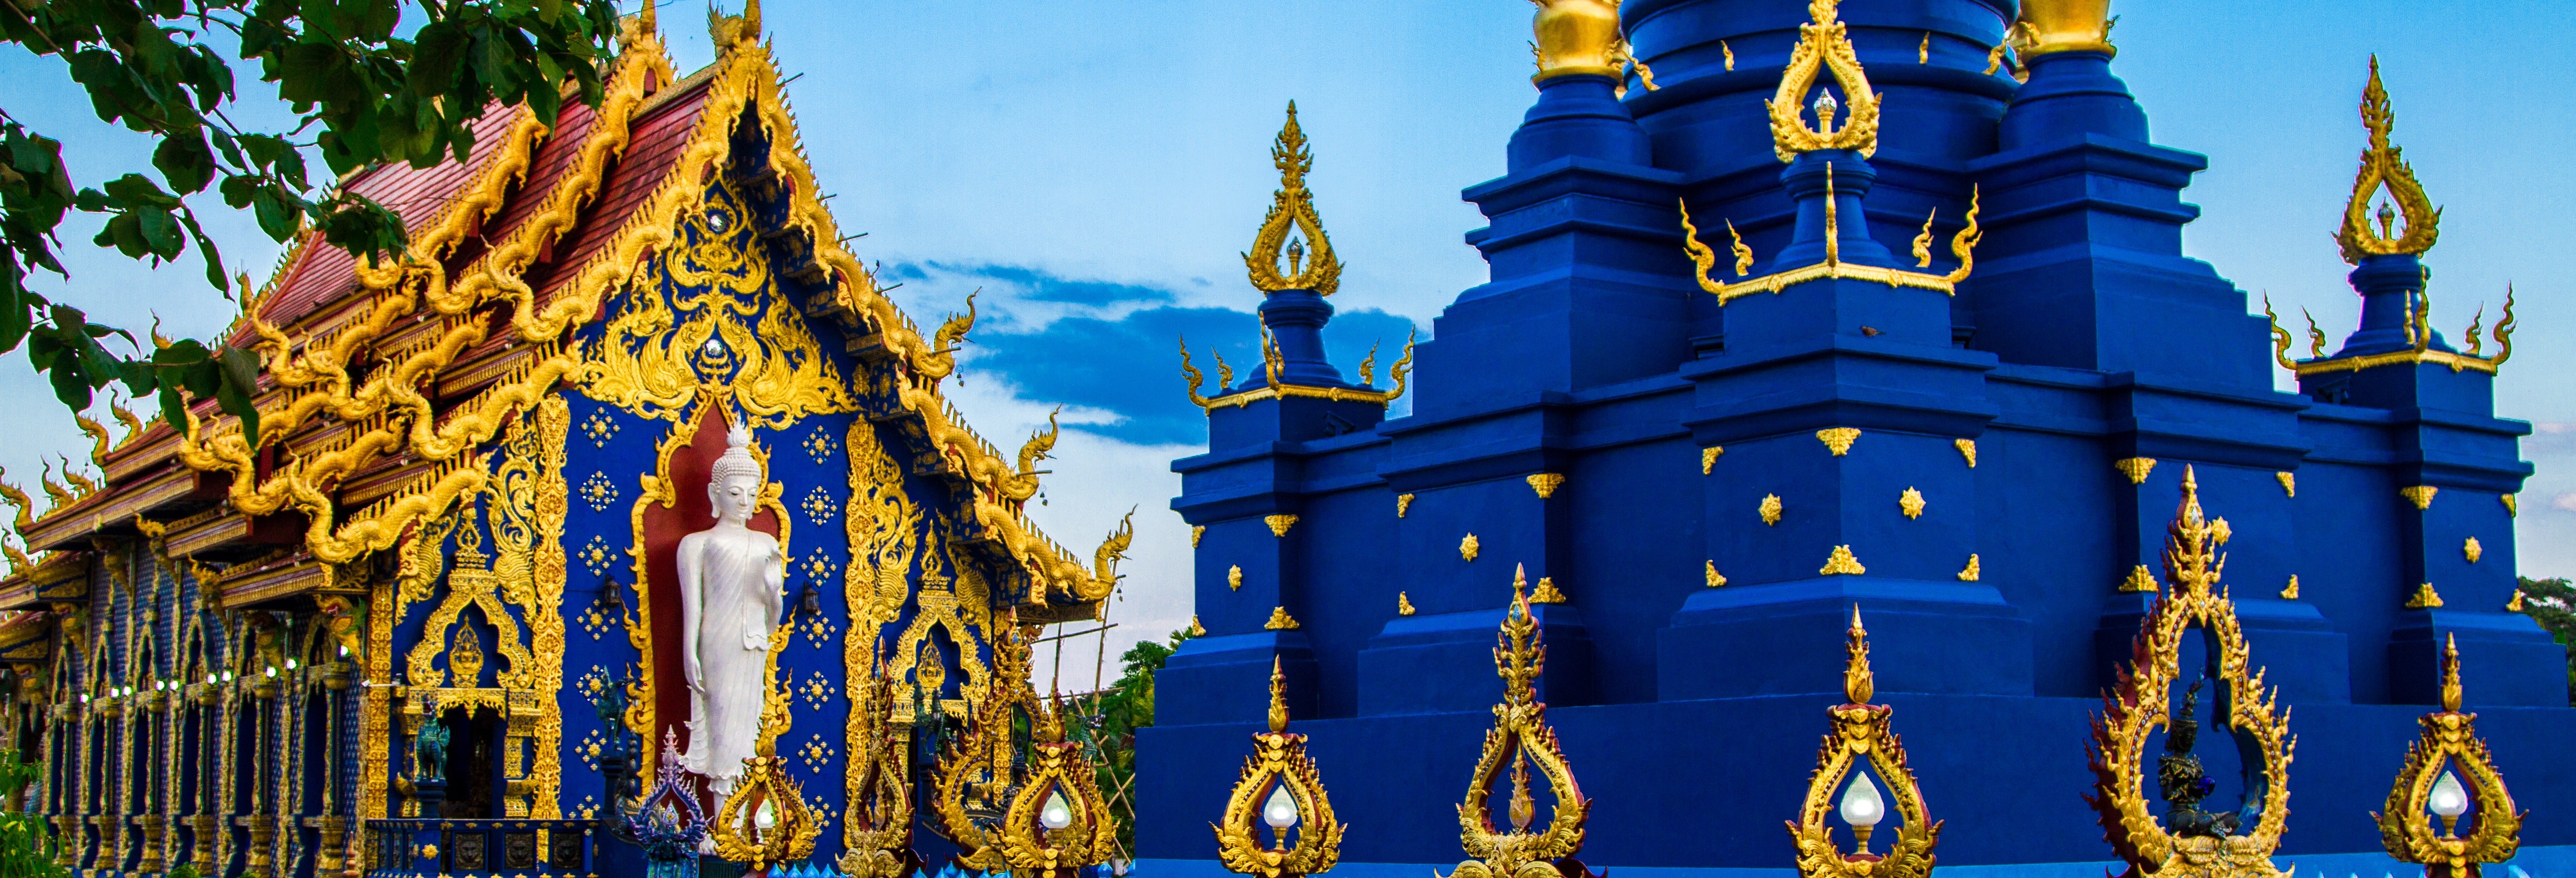 Excursão aos templos de Chiang Rai